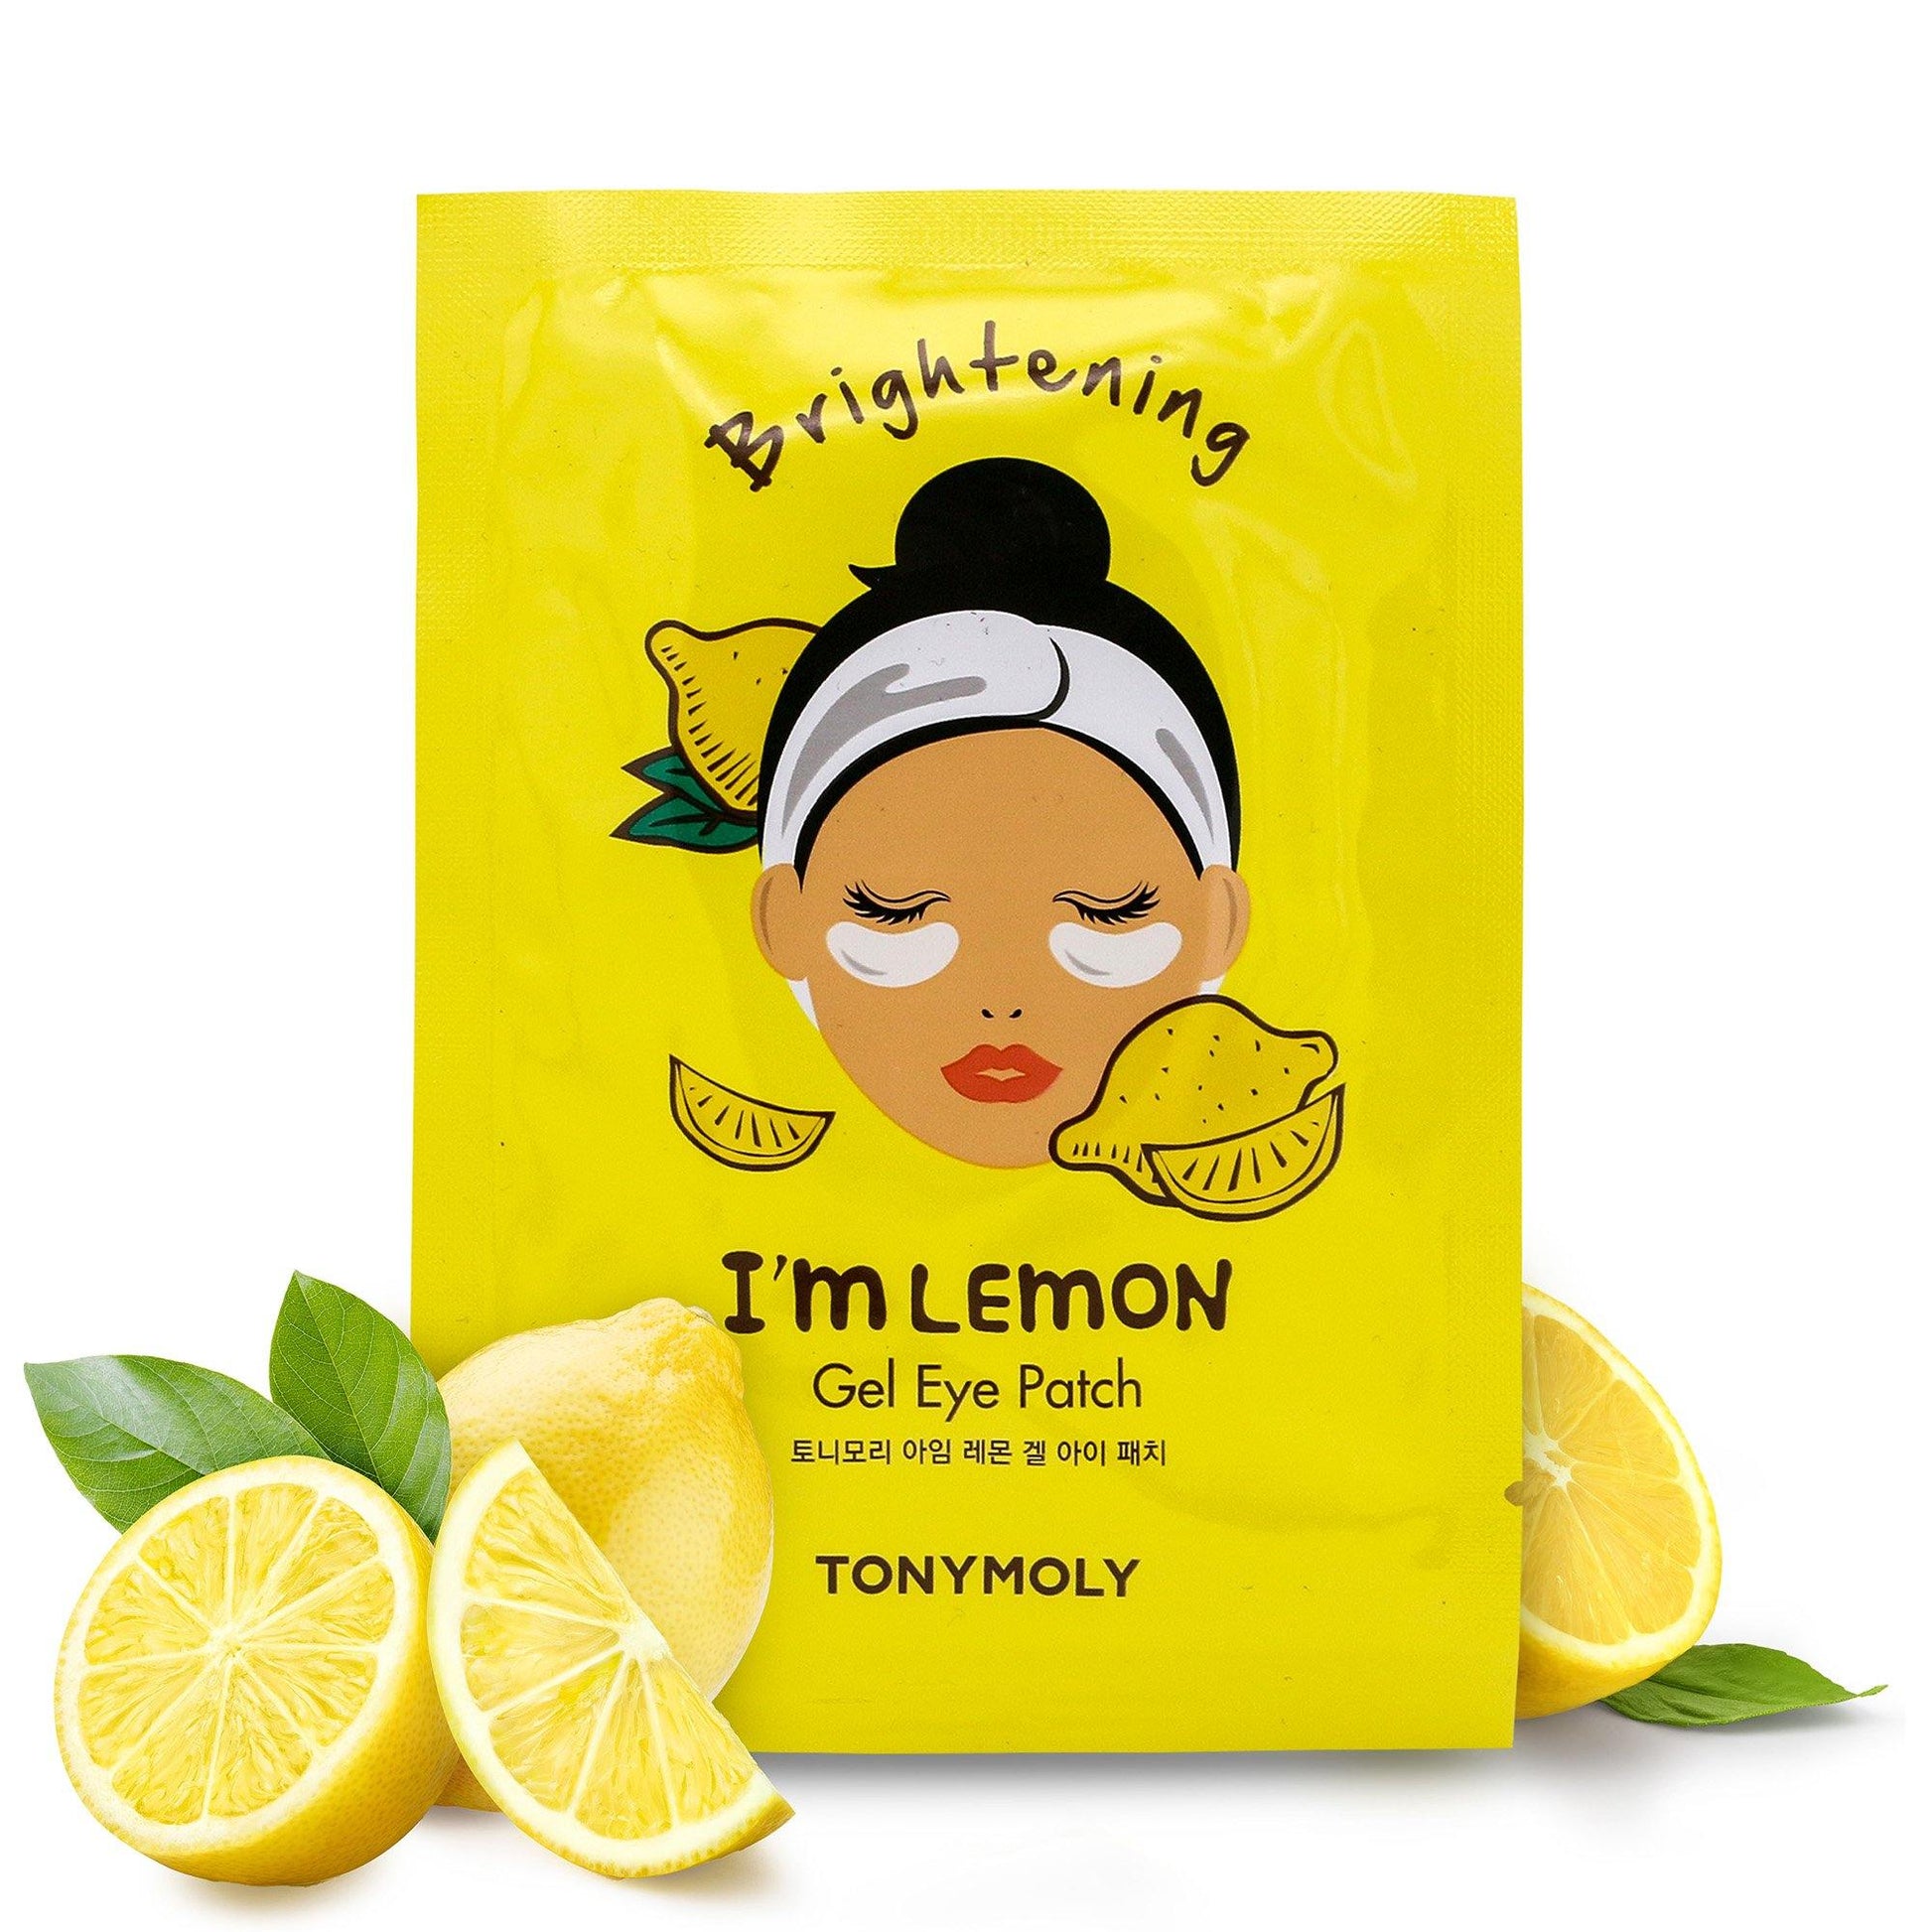 Tonymoly I'm Lemon Eye Patch - Hydrogel